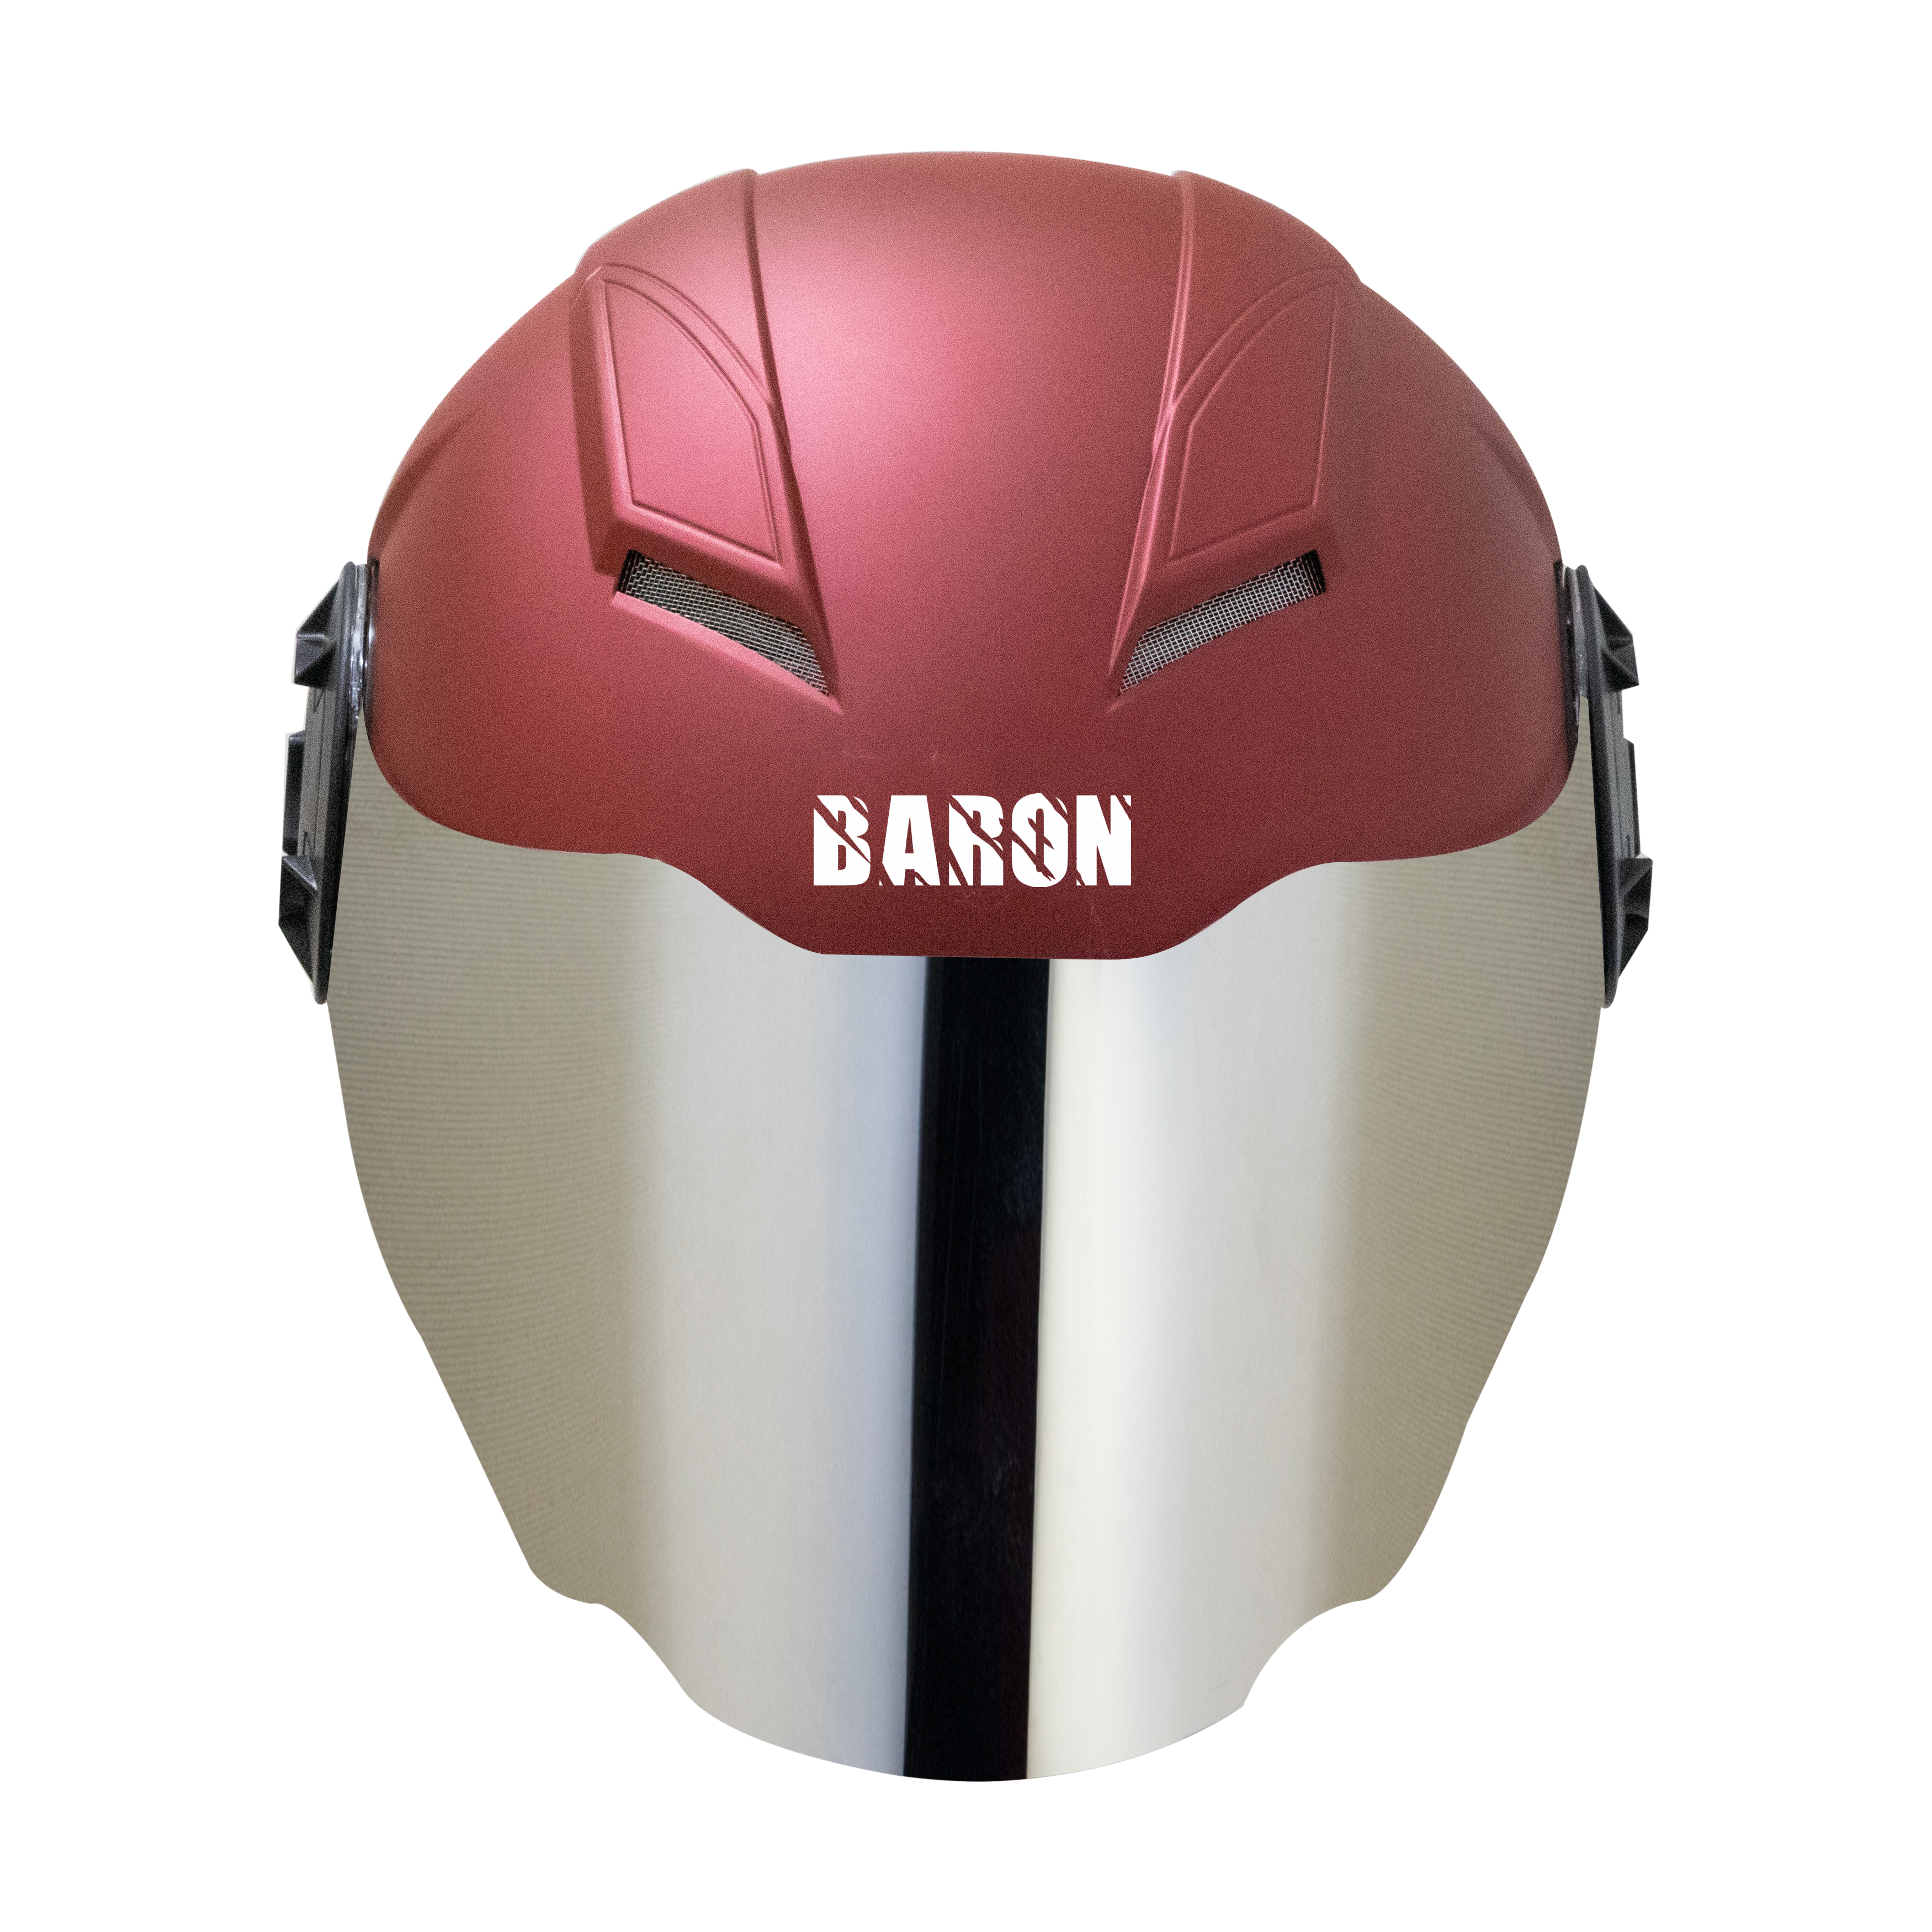 Steelbird Baron Open Face Helmet , ISI Certified Helmet (Matt Black With Chrome Gold Visor)